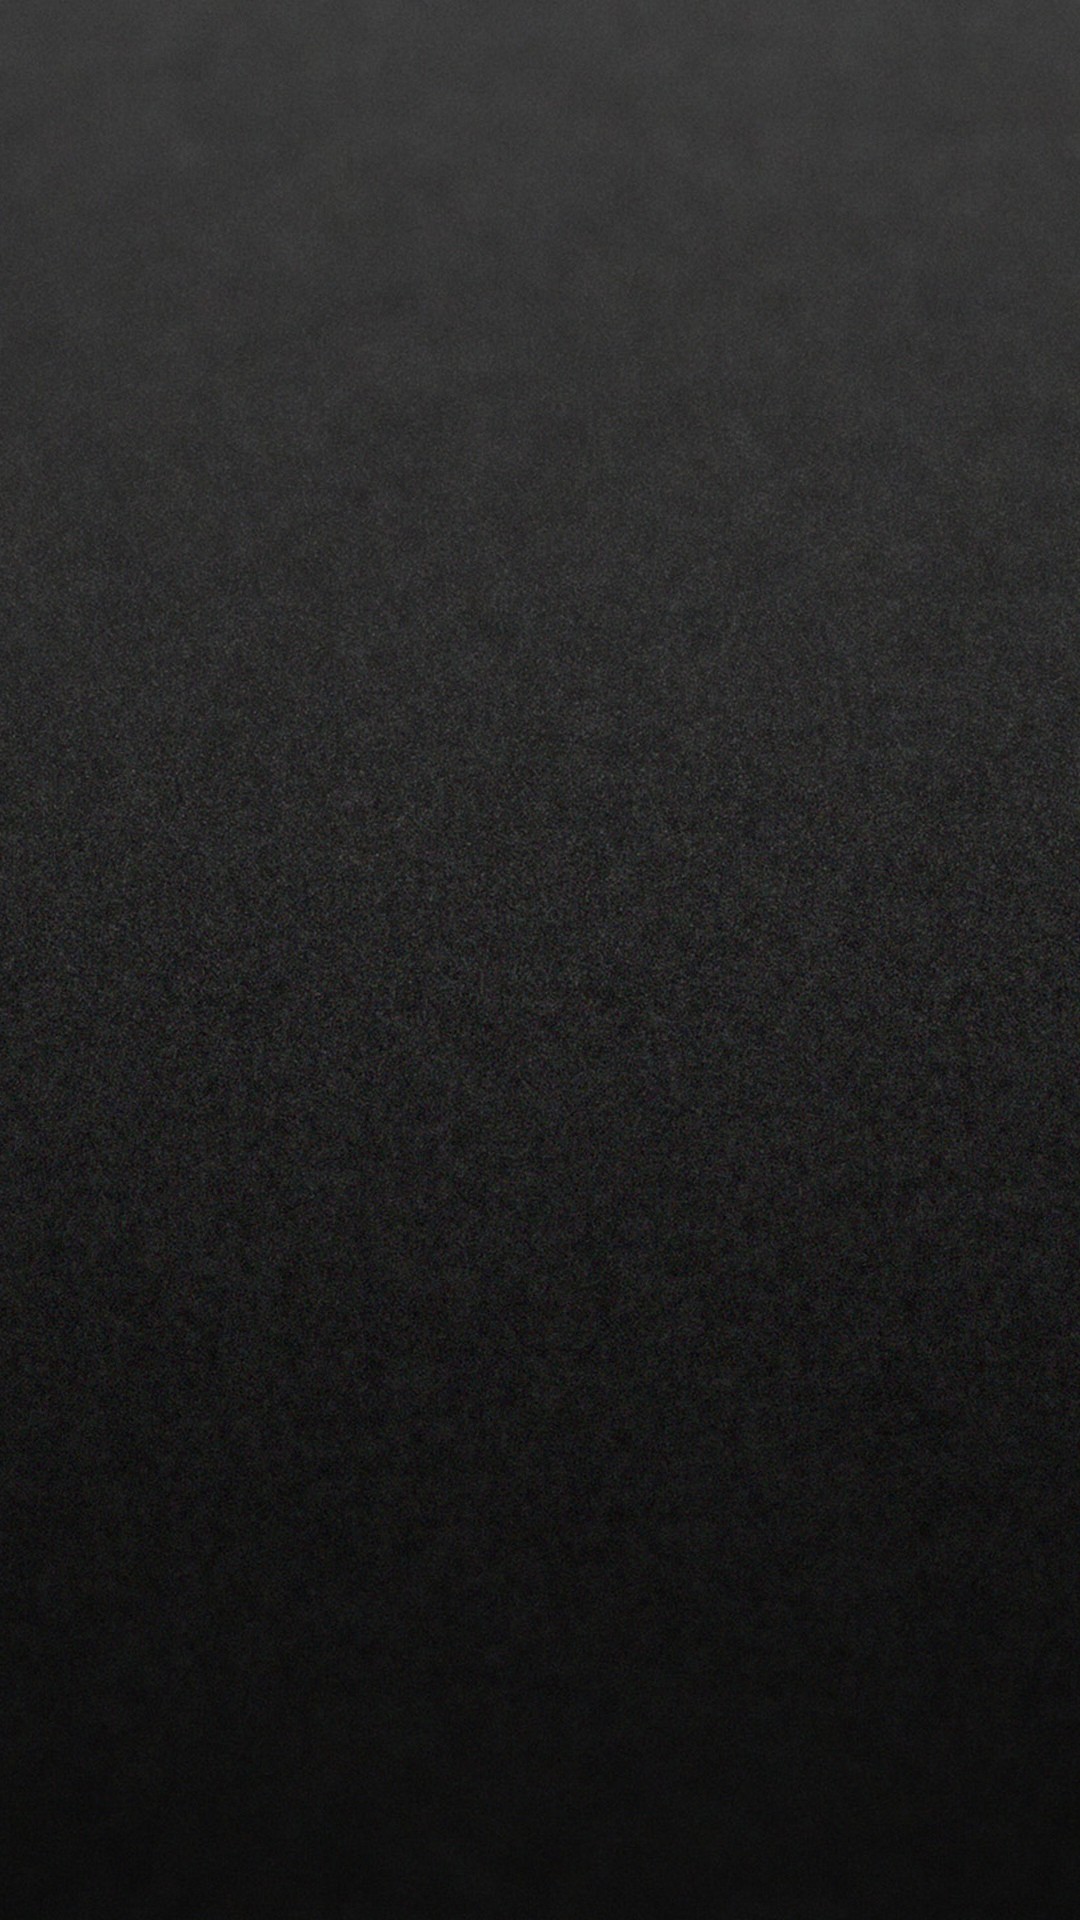 1080x1920 Wallpapers for Galaxy - Carbon Fiber Texture Wallpaper